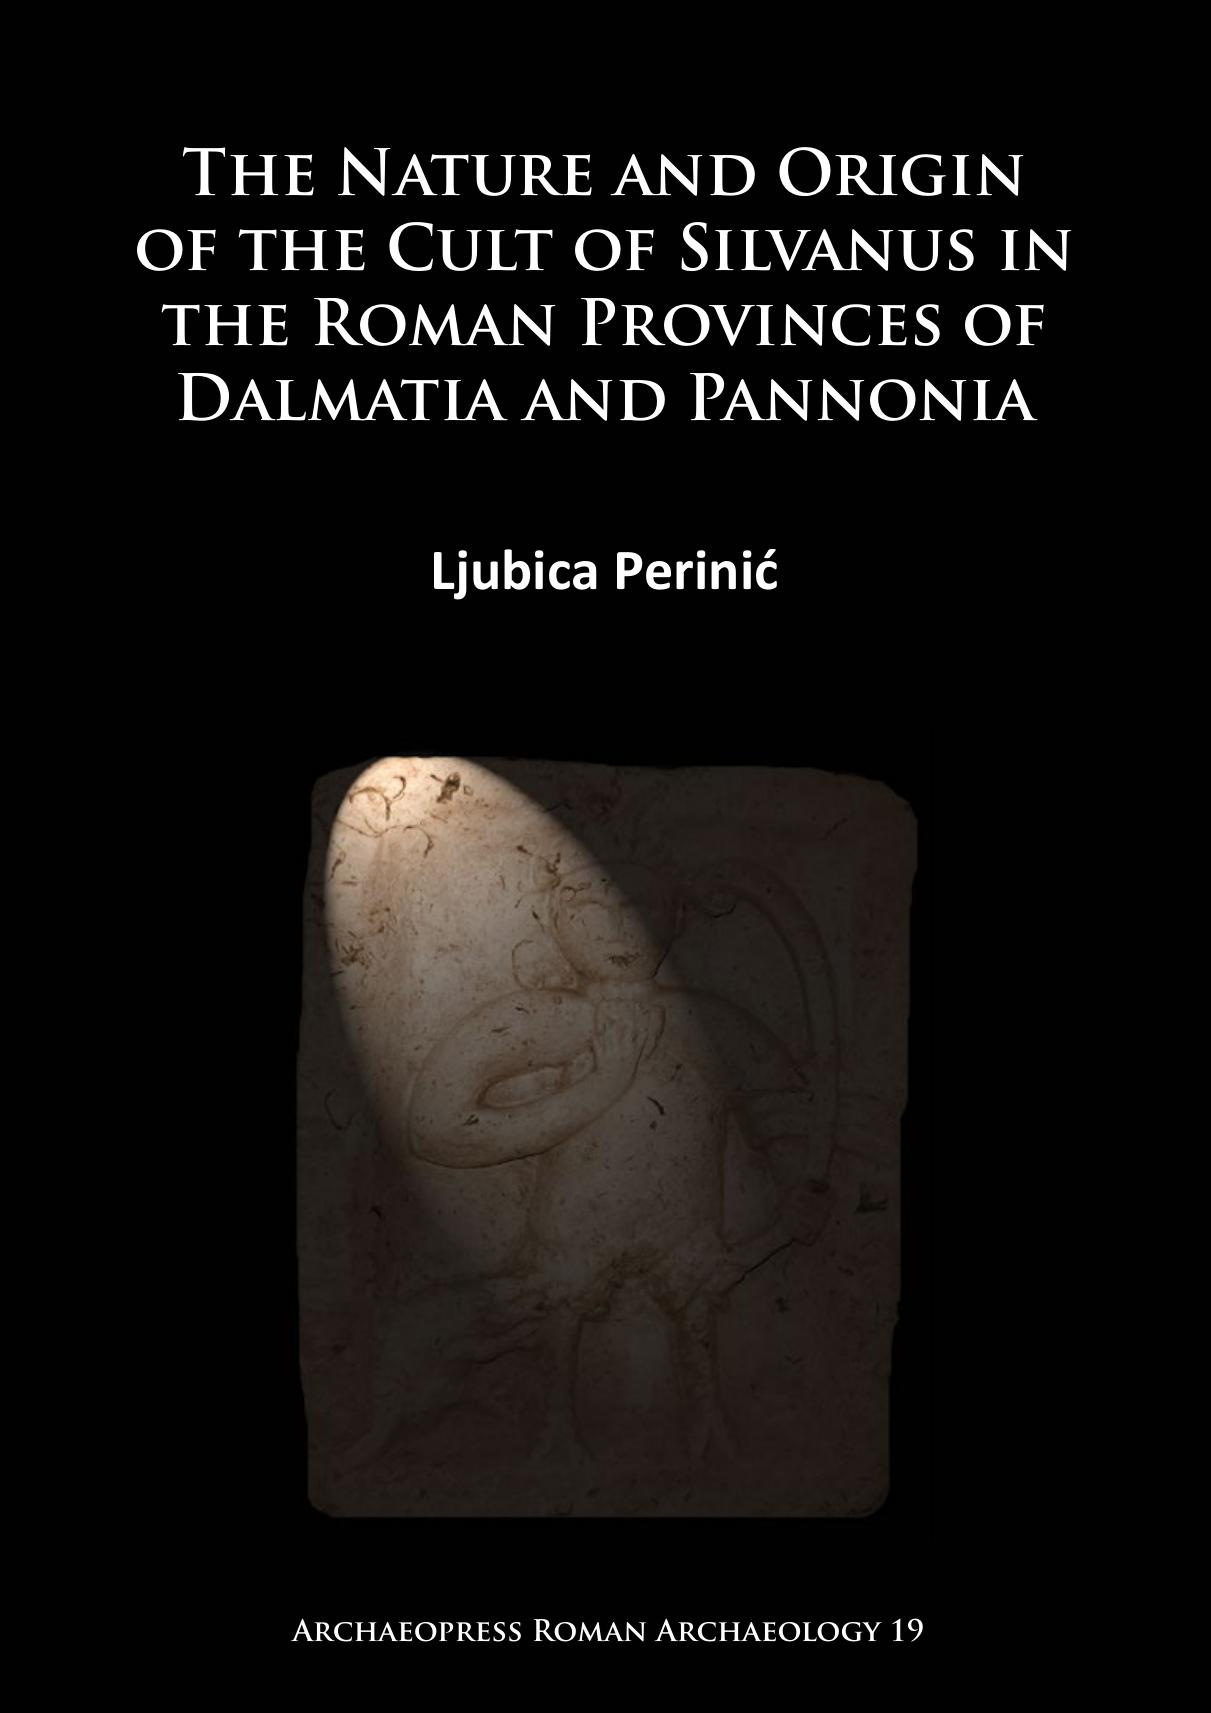 The Nature and Origin of the Cult of Silvanus in the Roman Provinces of Dalmatia and Pannonia by Ljubica Perinić